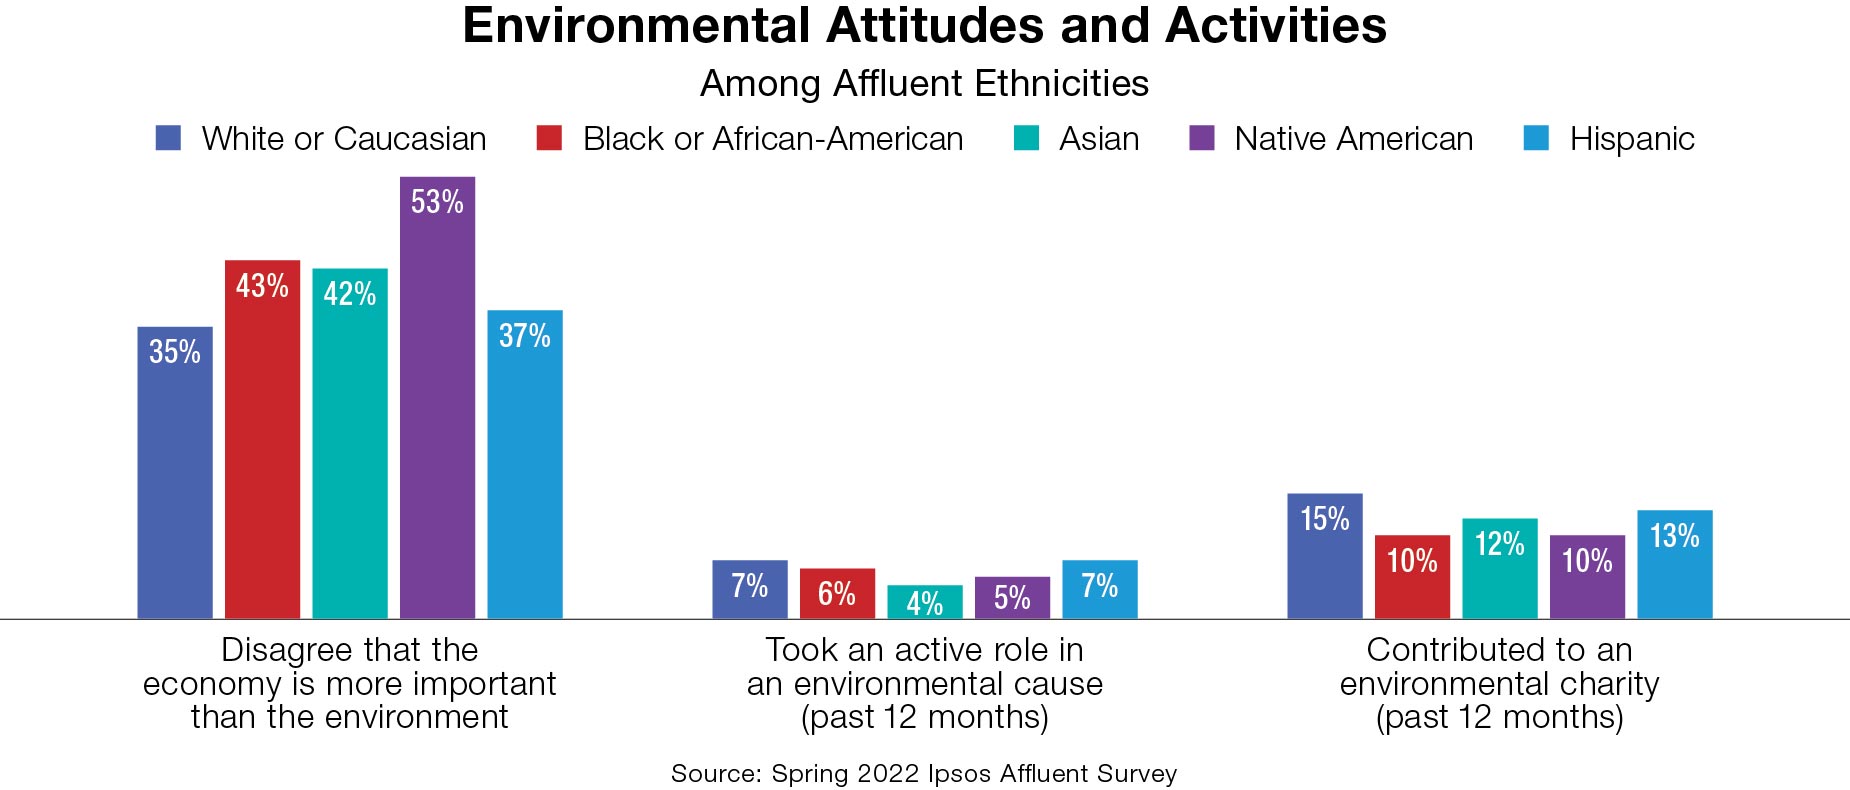 Environmental attitudes and activities